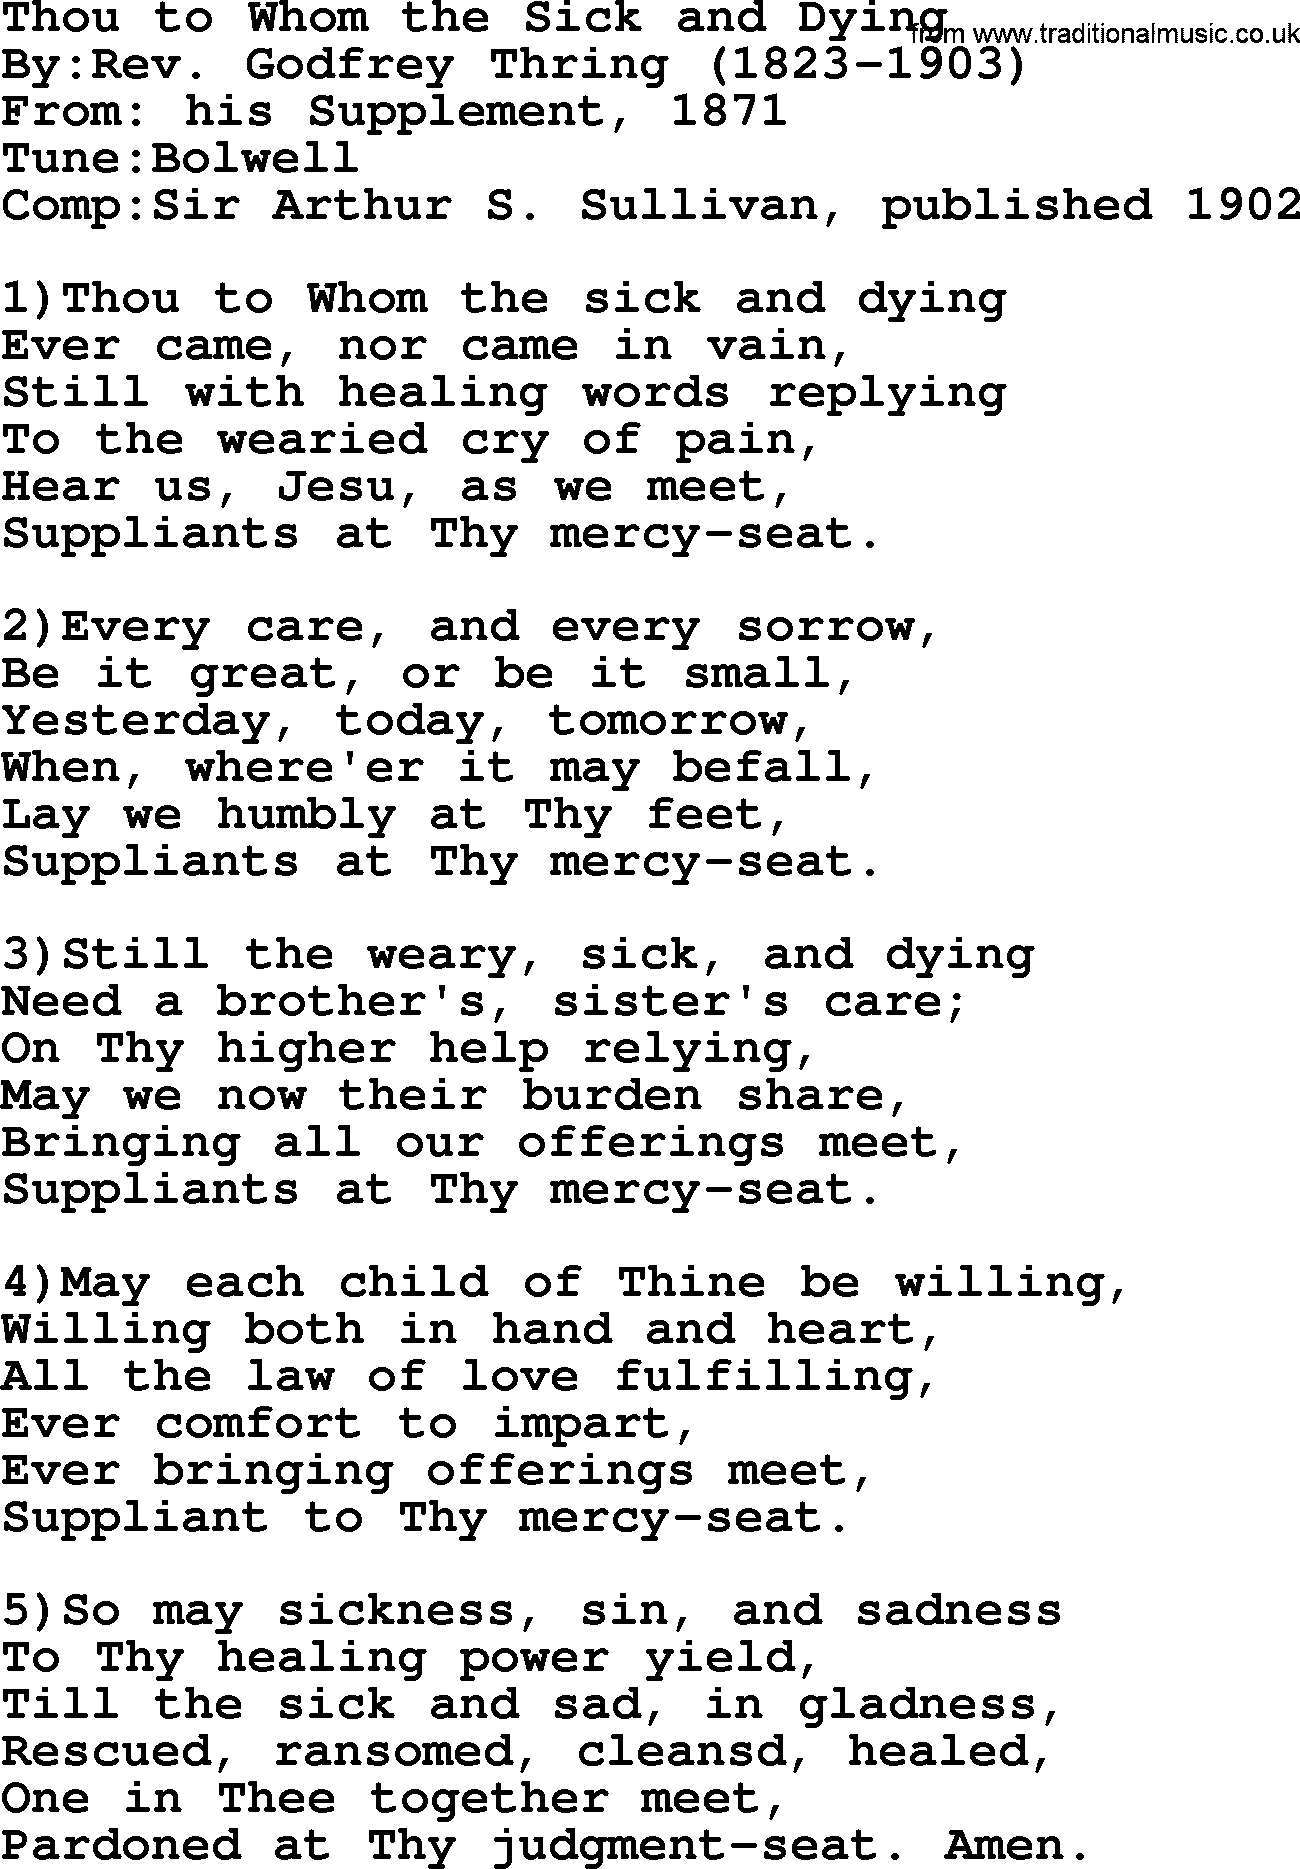 Methodist Hymn: Thou To Whom The Sick And Dying, lyrics